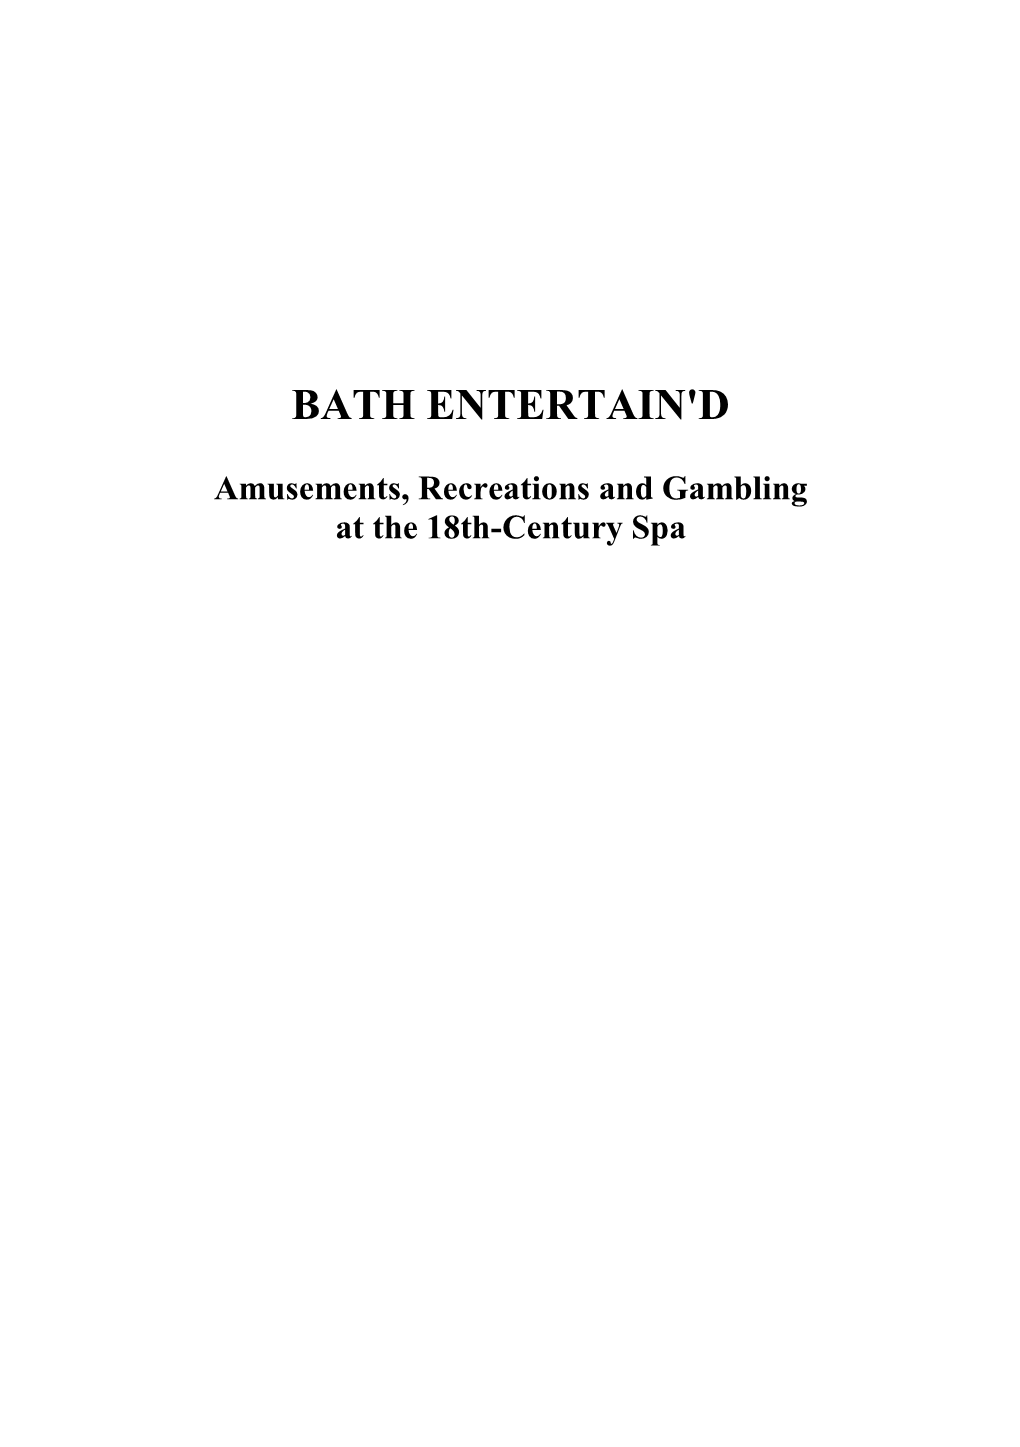 Bath Entertain'd